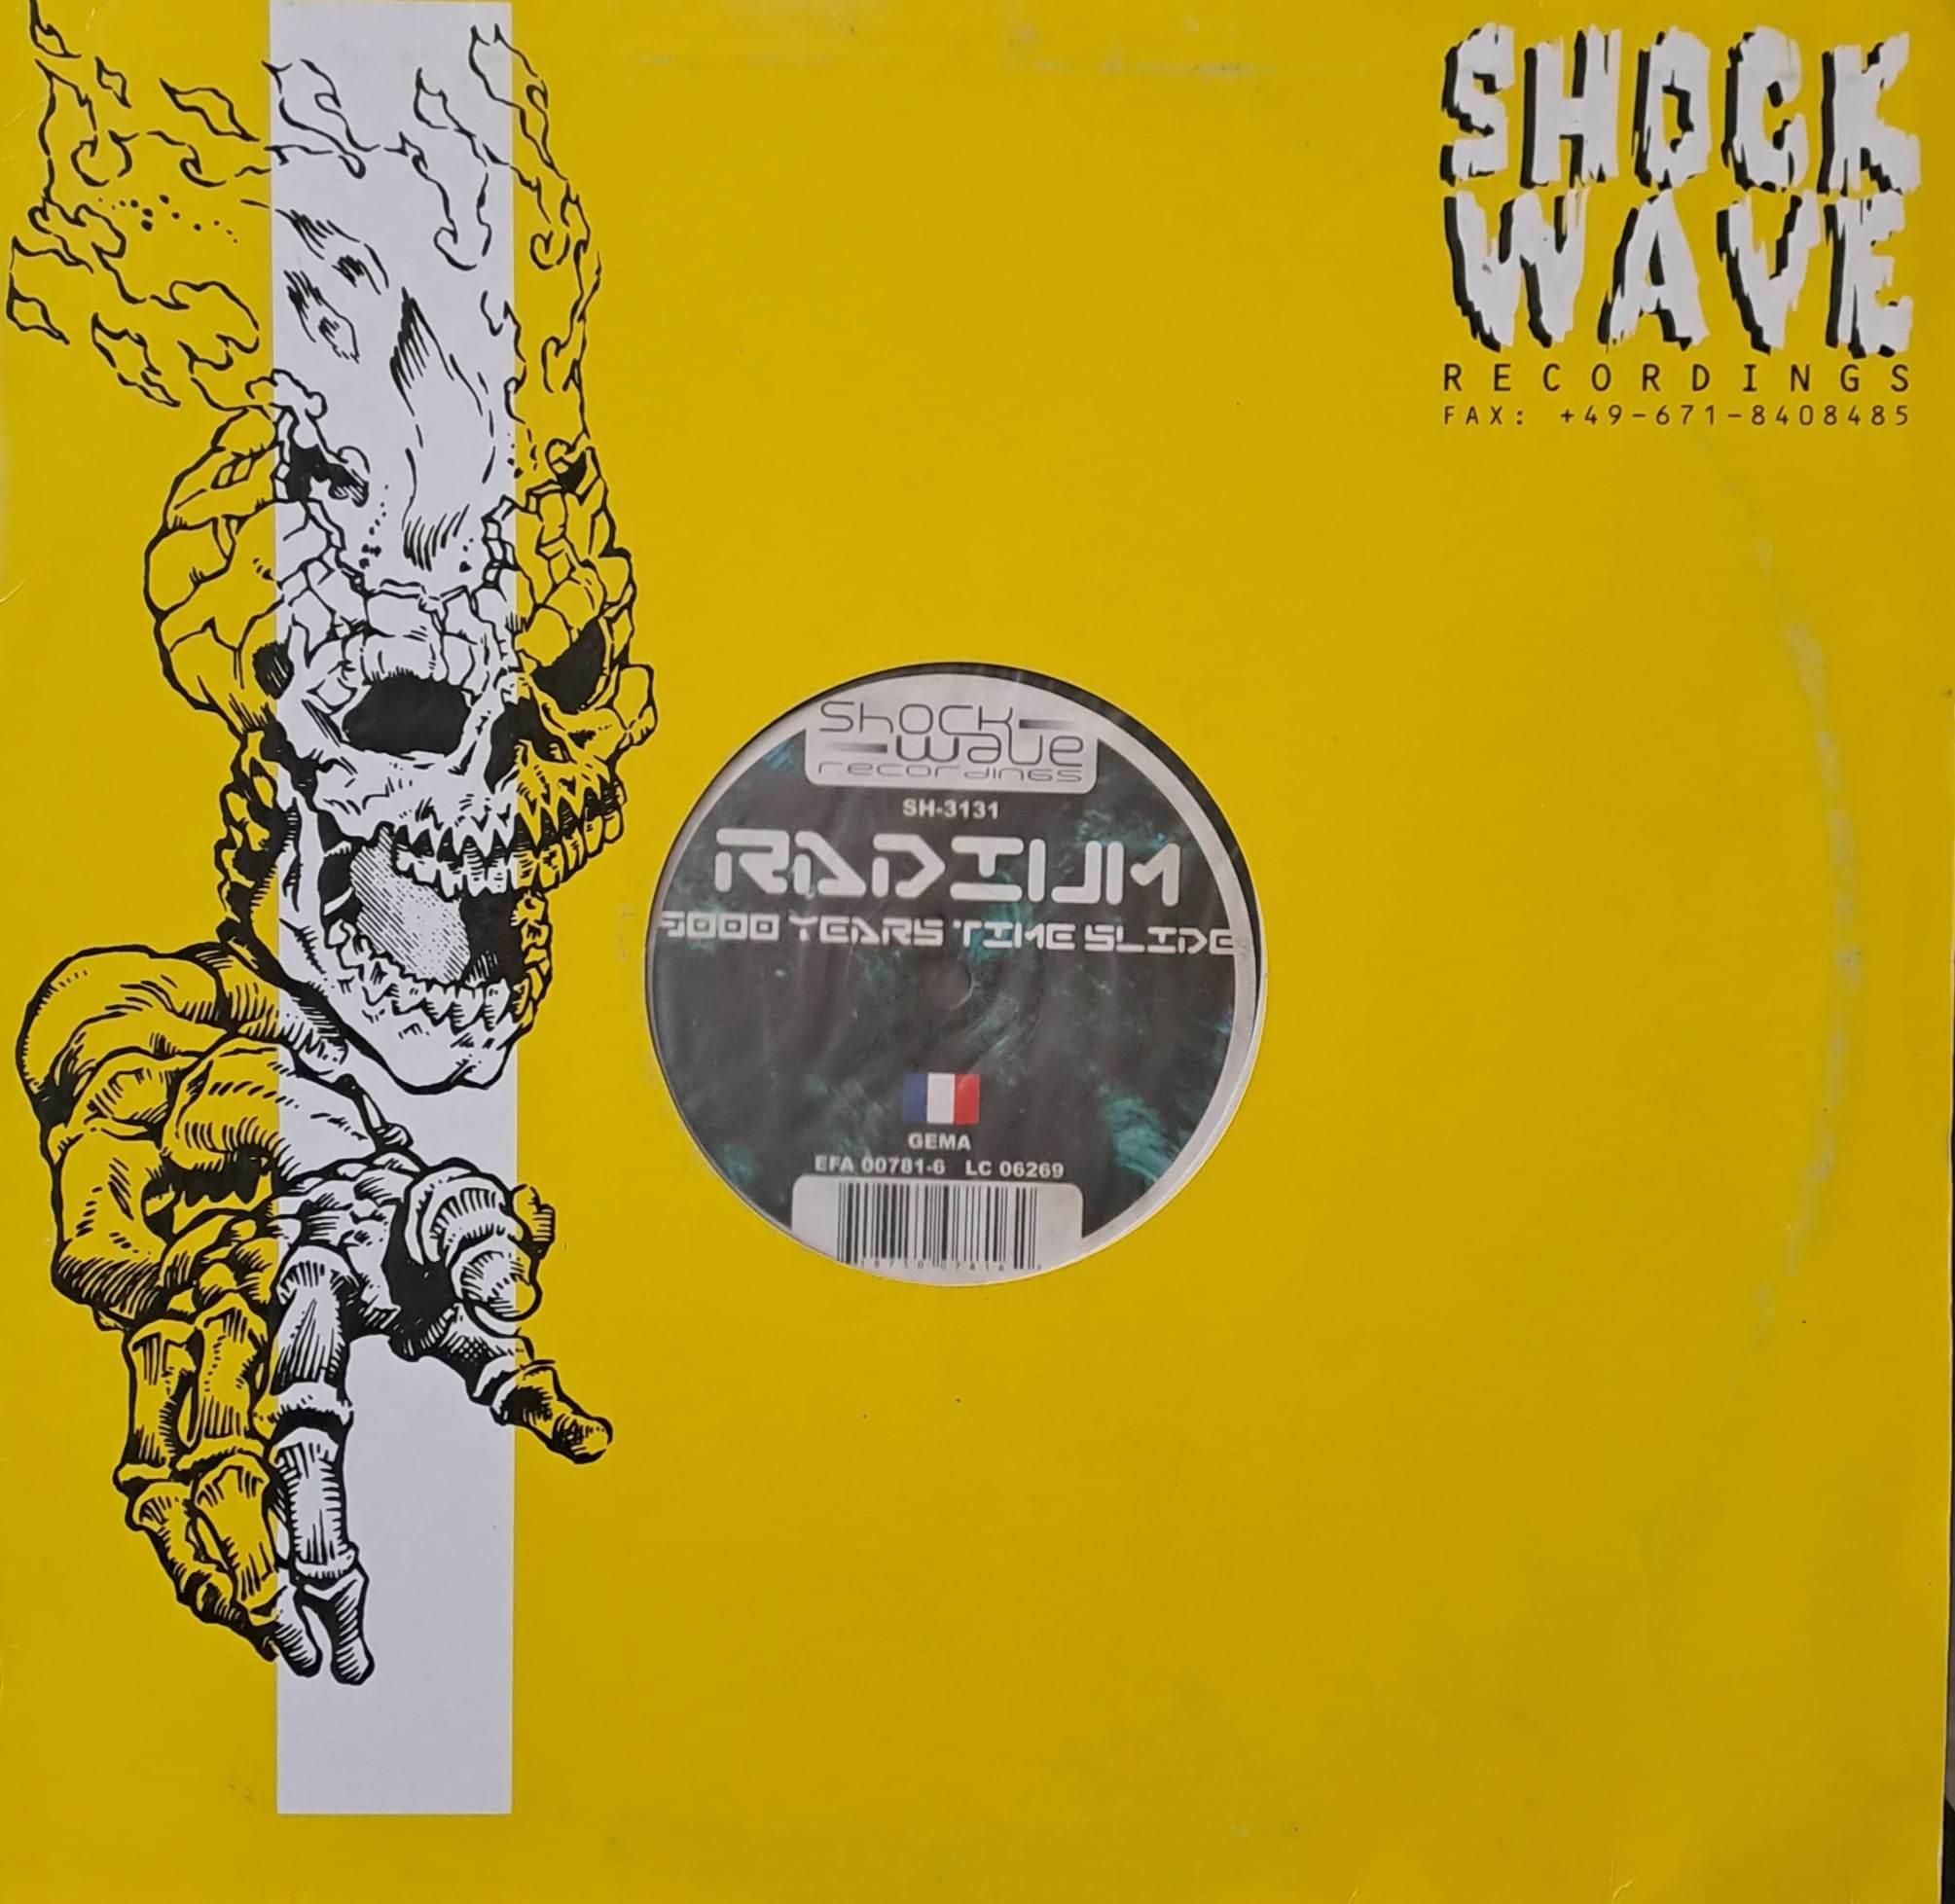 Shockwave Recordings 3131 - vinyle hardcore